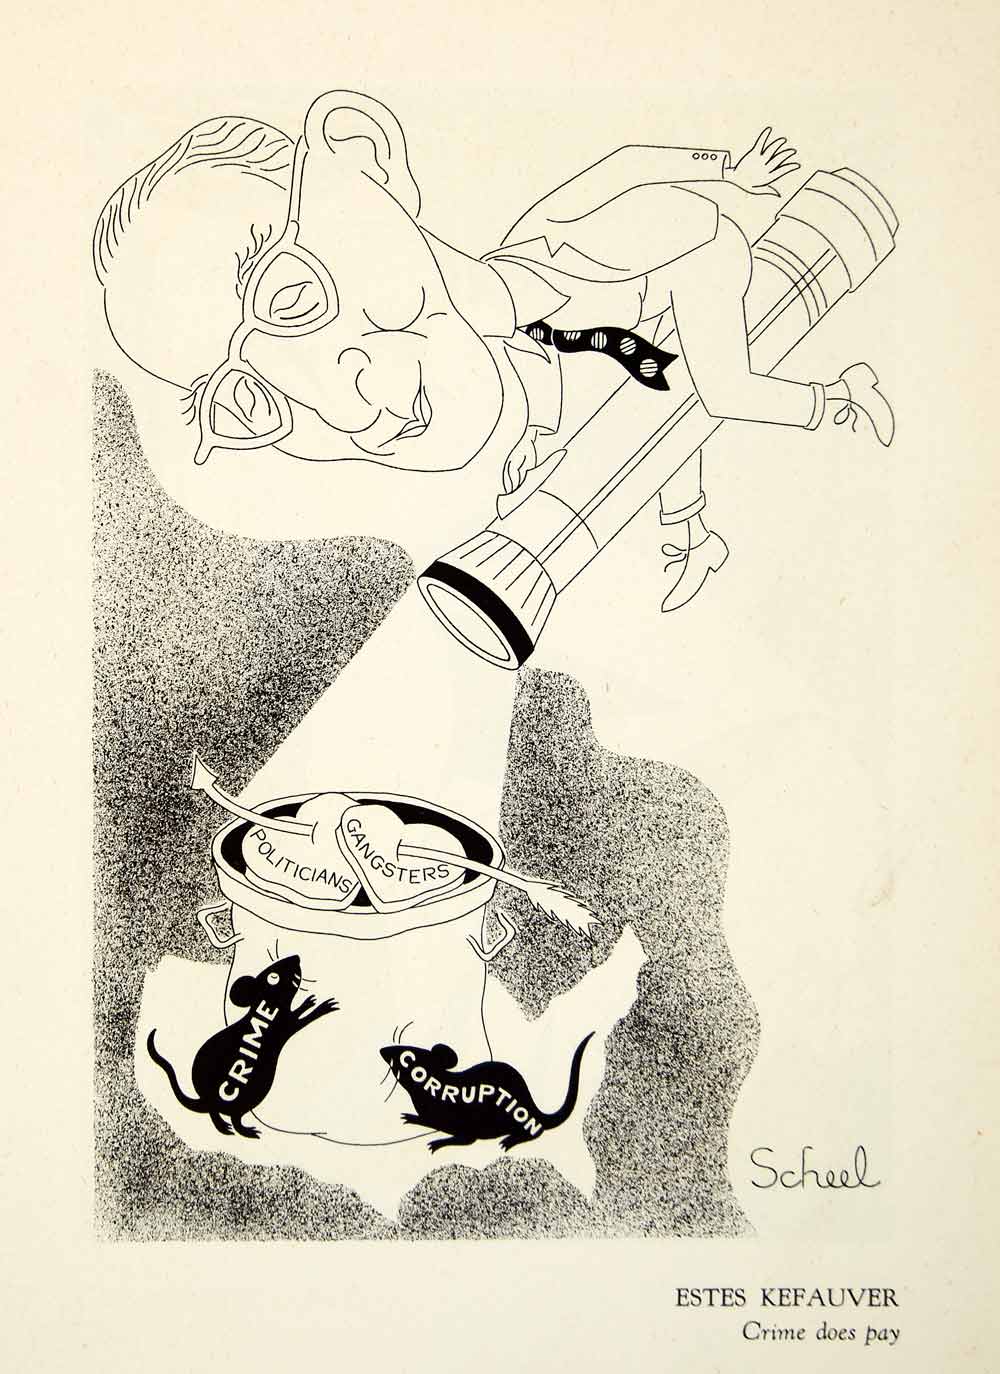 1951 Offset Lithograph Estes Kefauver Crime Pay Caricature Theodor Scheel Mice